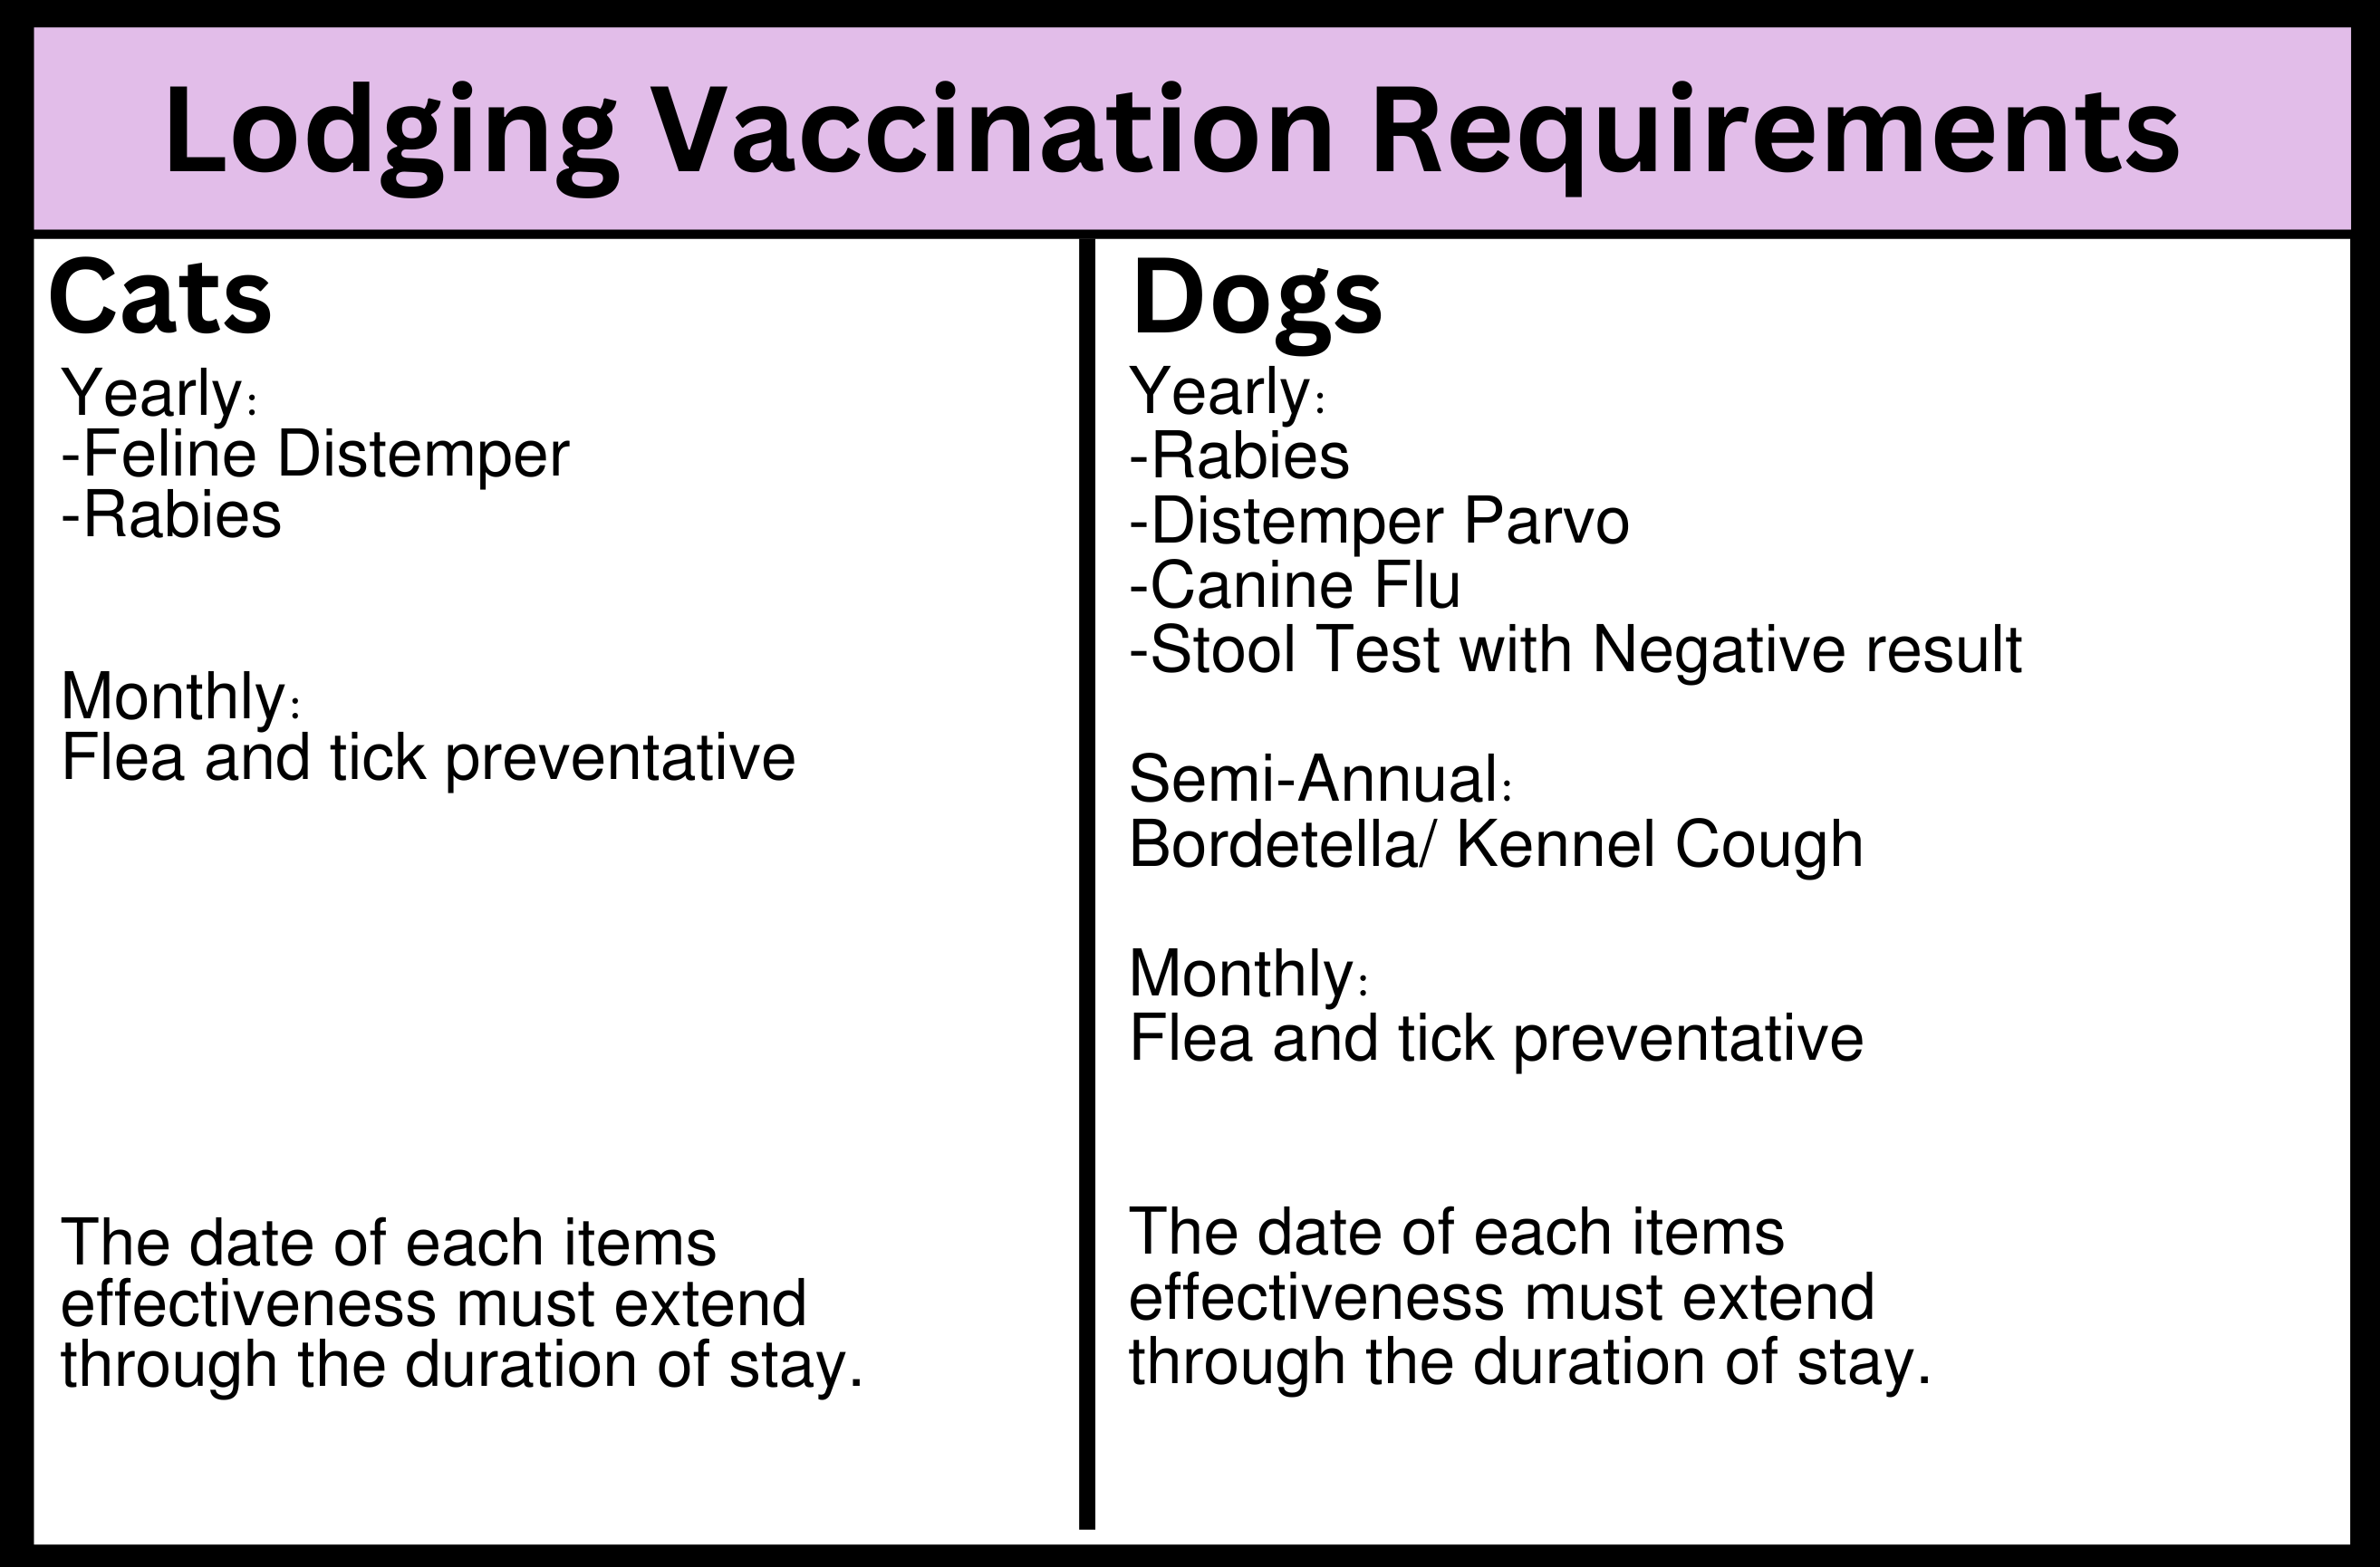 Vaccine Requirements